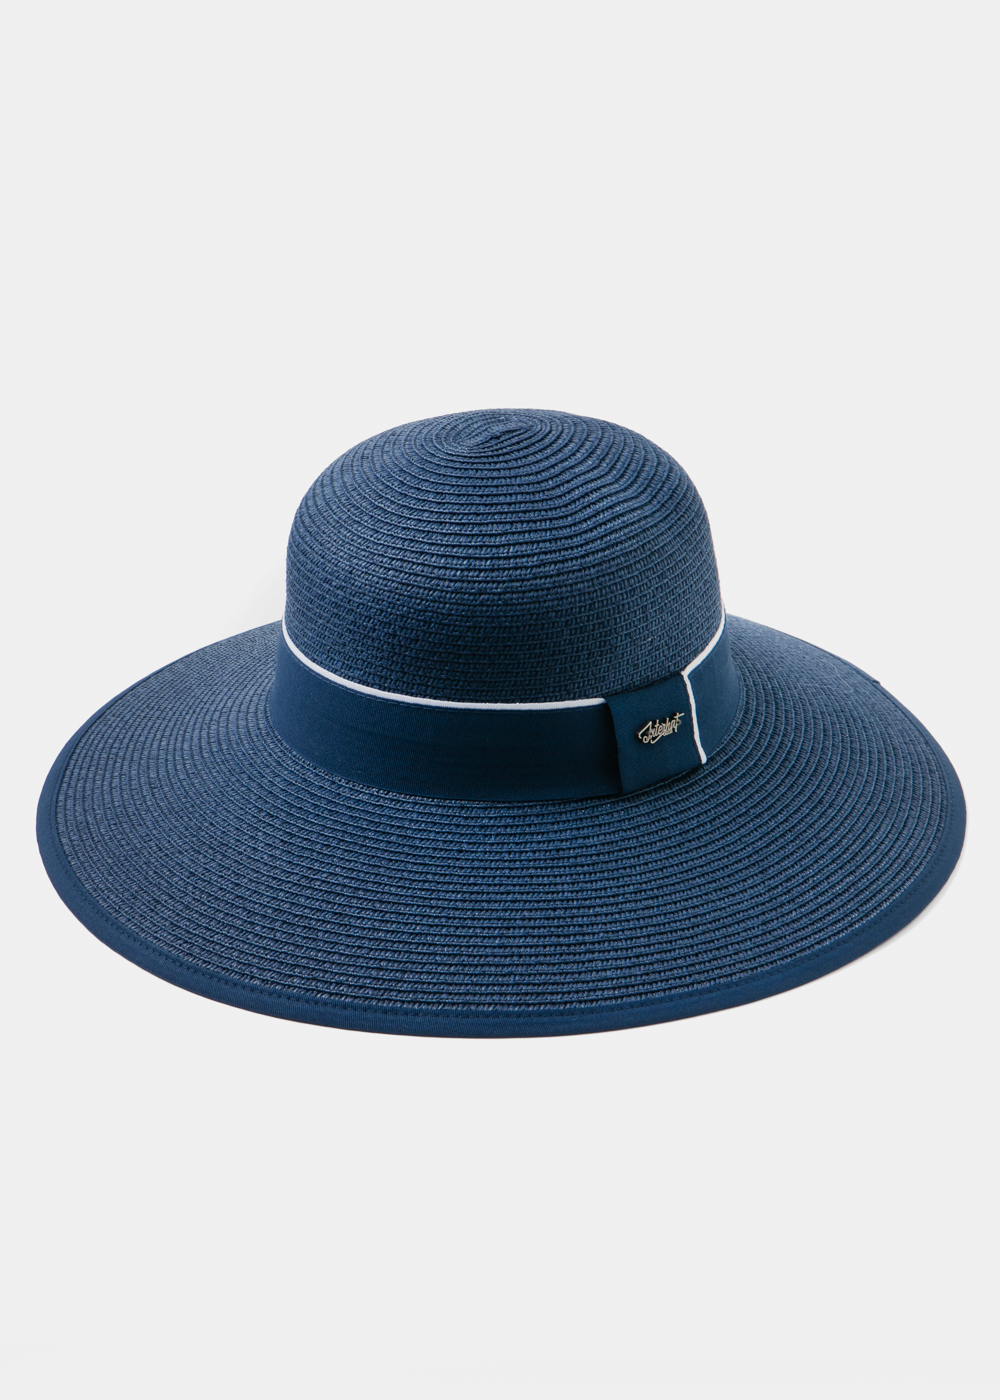 Navy Straw Hat w/ navy hatband